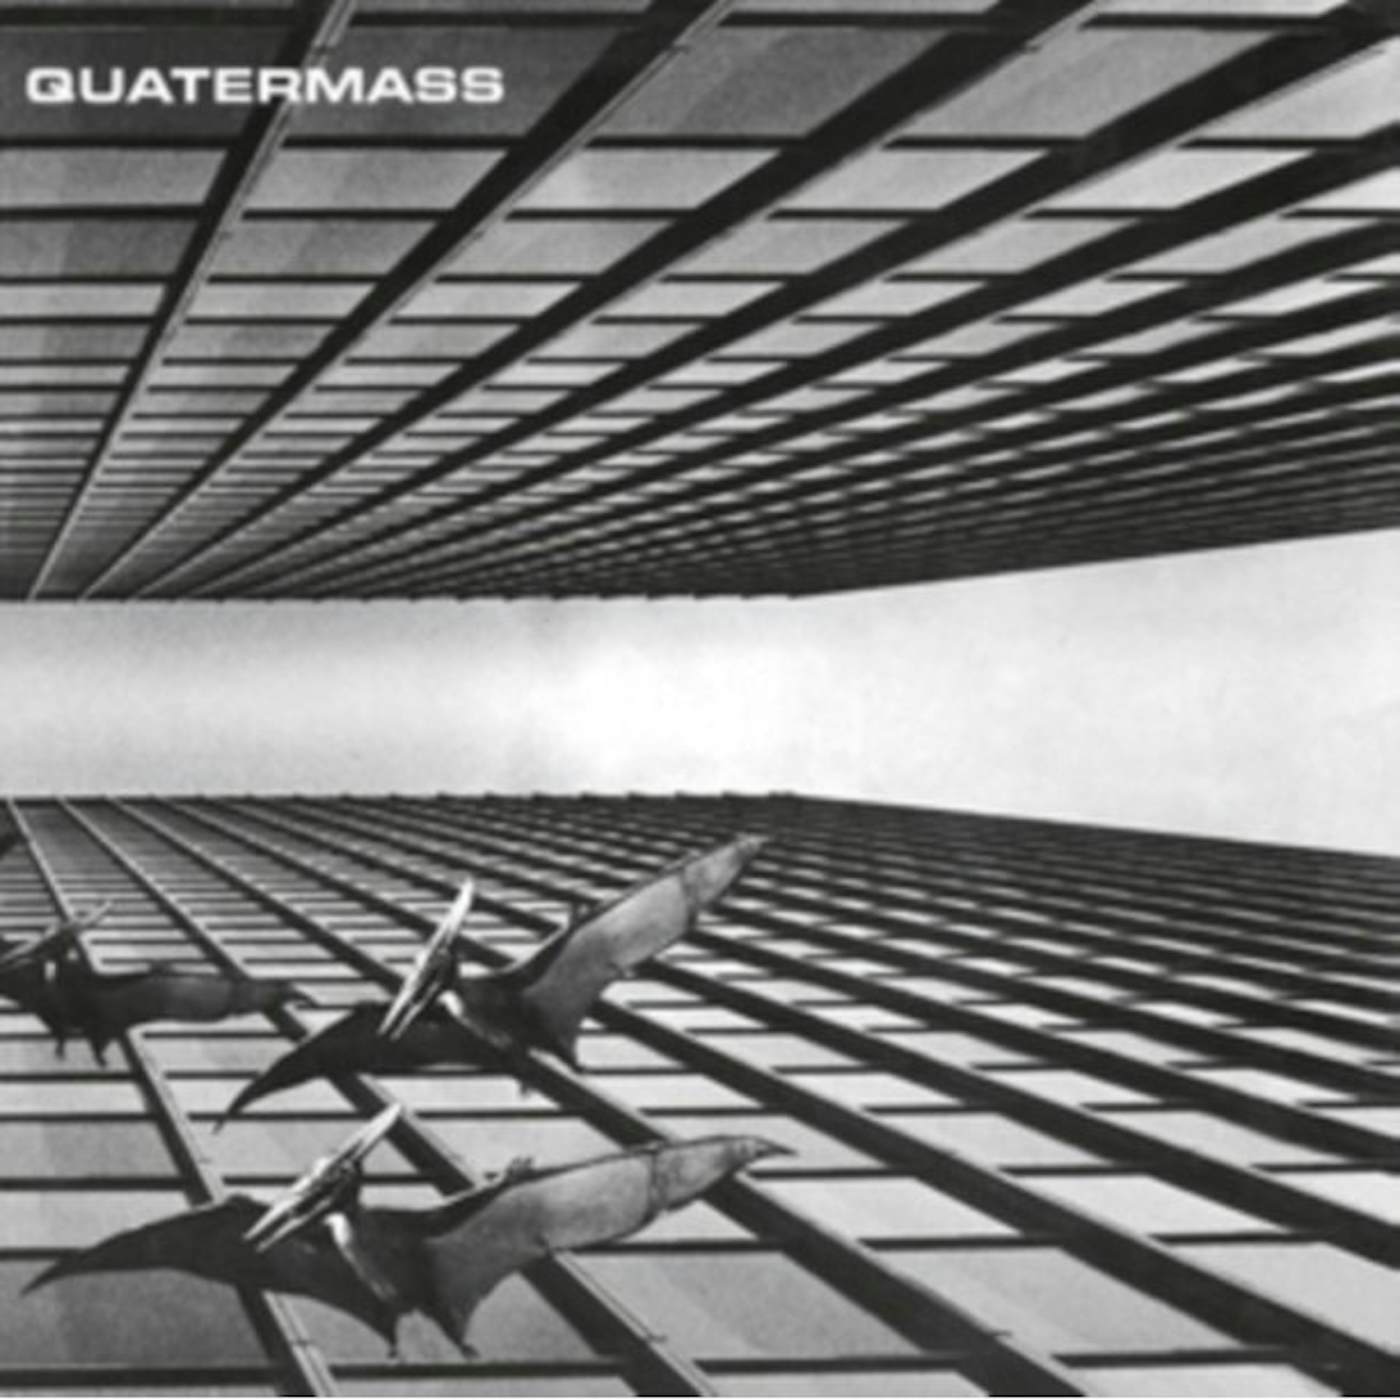 QUATERMASS (180G AUDIOPHILE VINYL/GATEFOLD/IMPORT) Vinyl Record